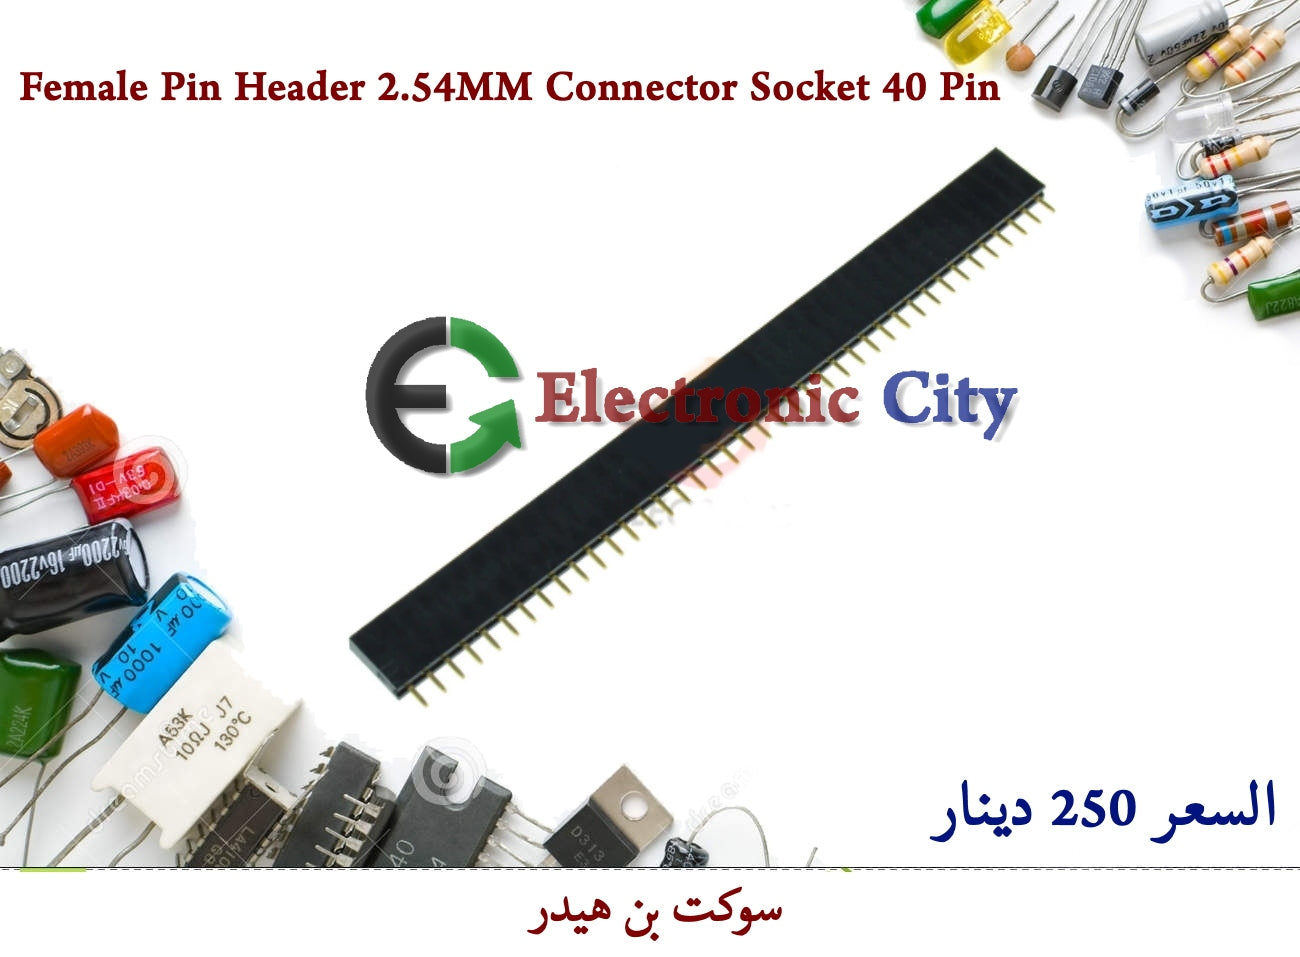 Female Pin Header 2.54MM Connector Socket 40 Pin